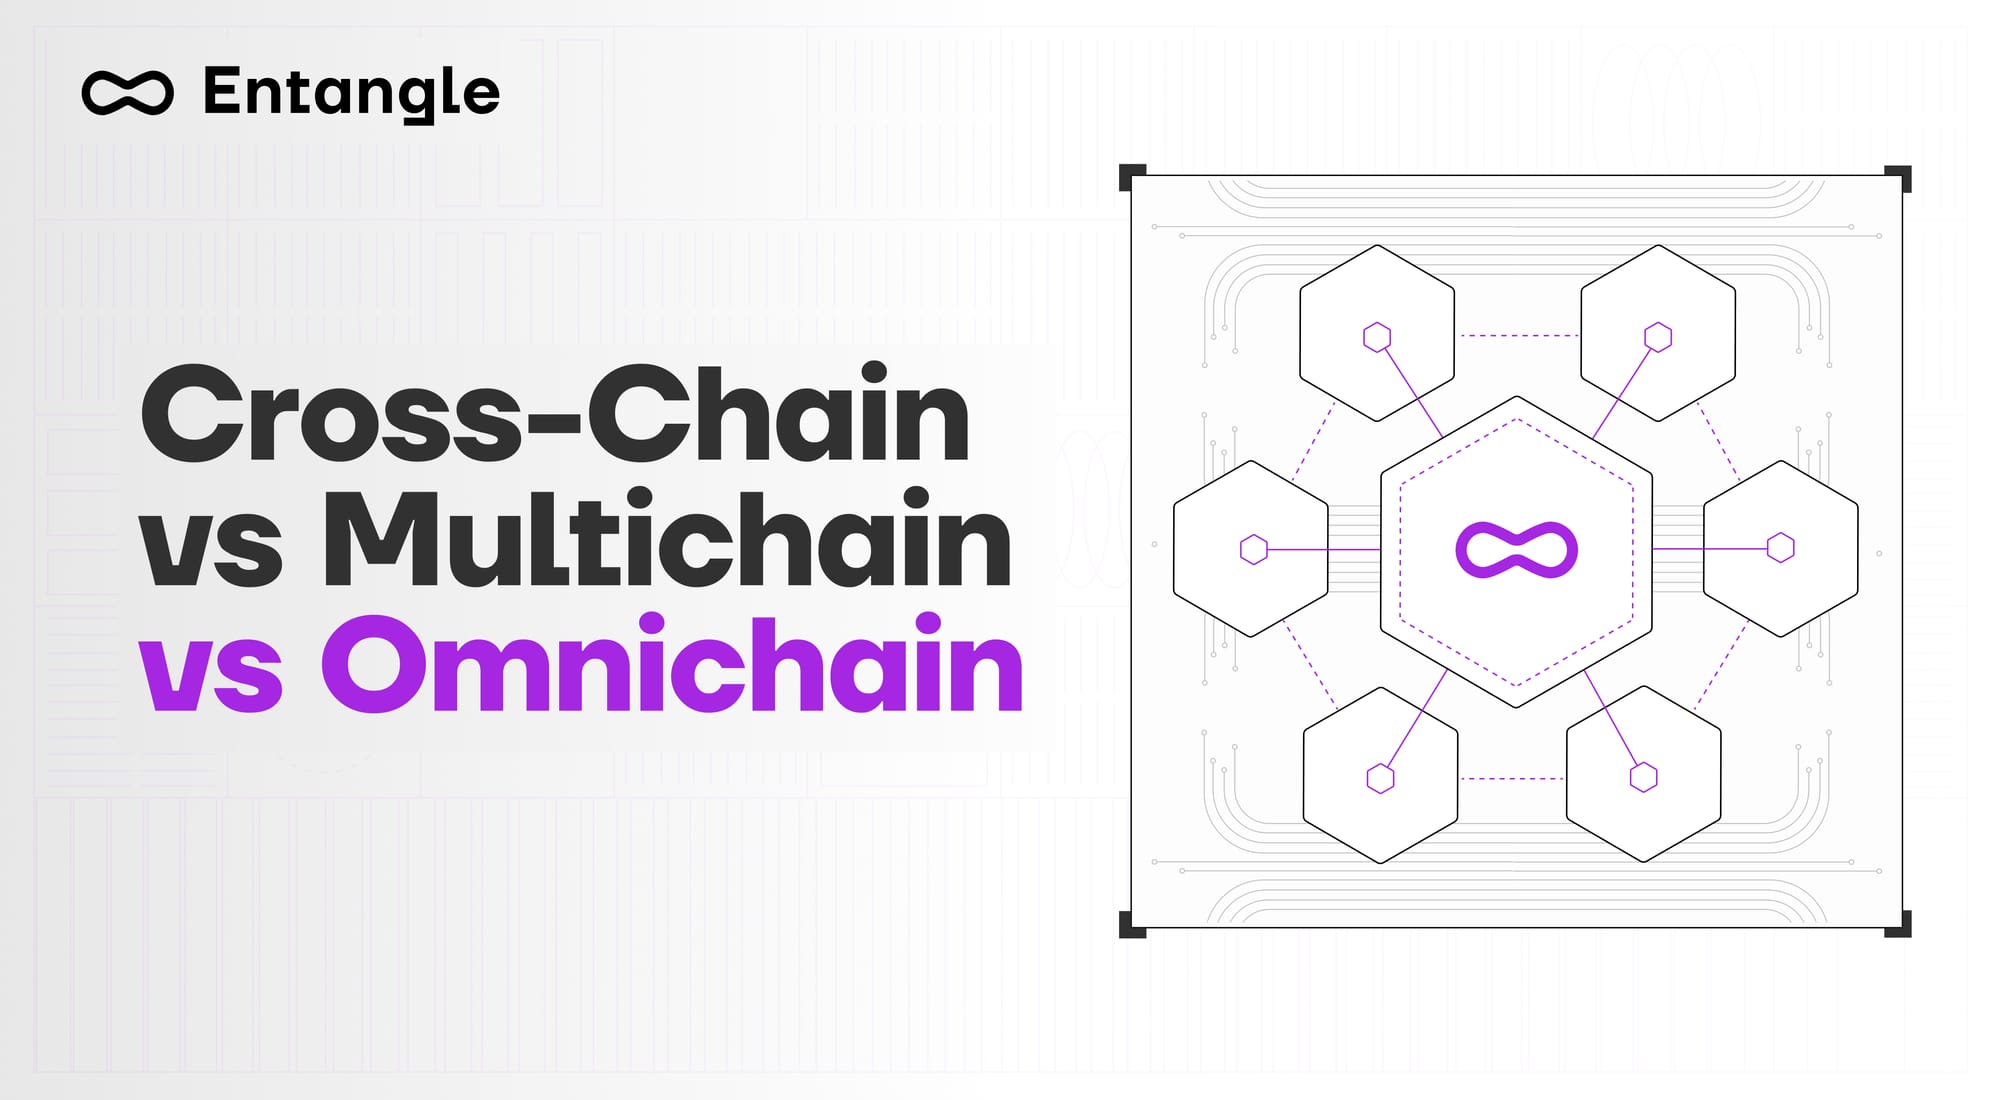 Cross-Chain vs Multichain vs Omnichain